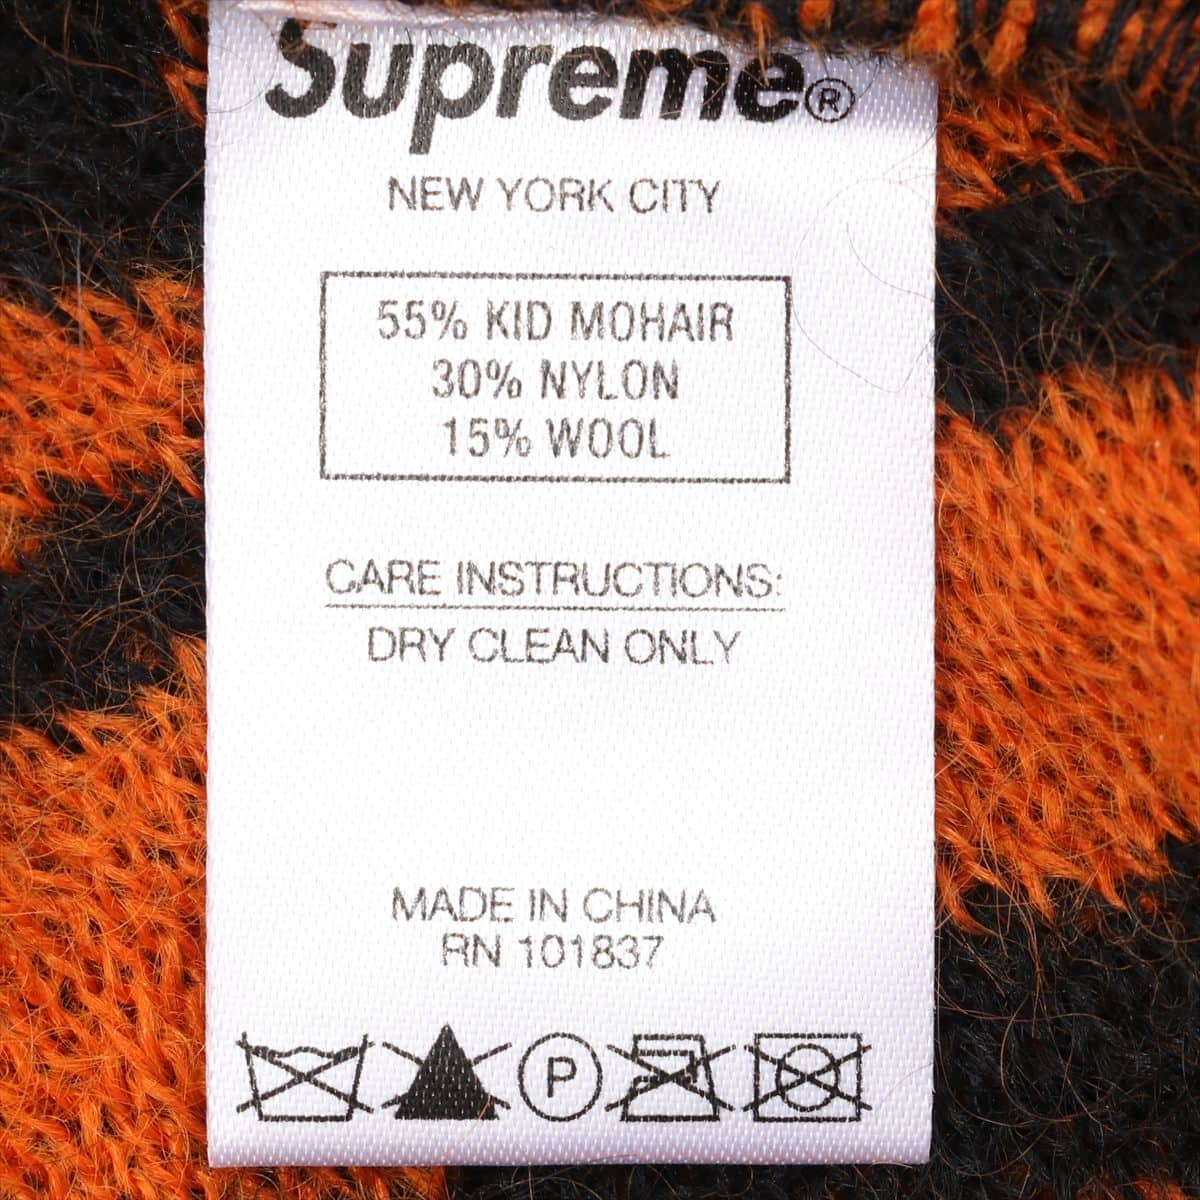 Supreme Knit cap Acrylic Orange Animal pattern